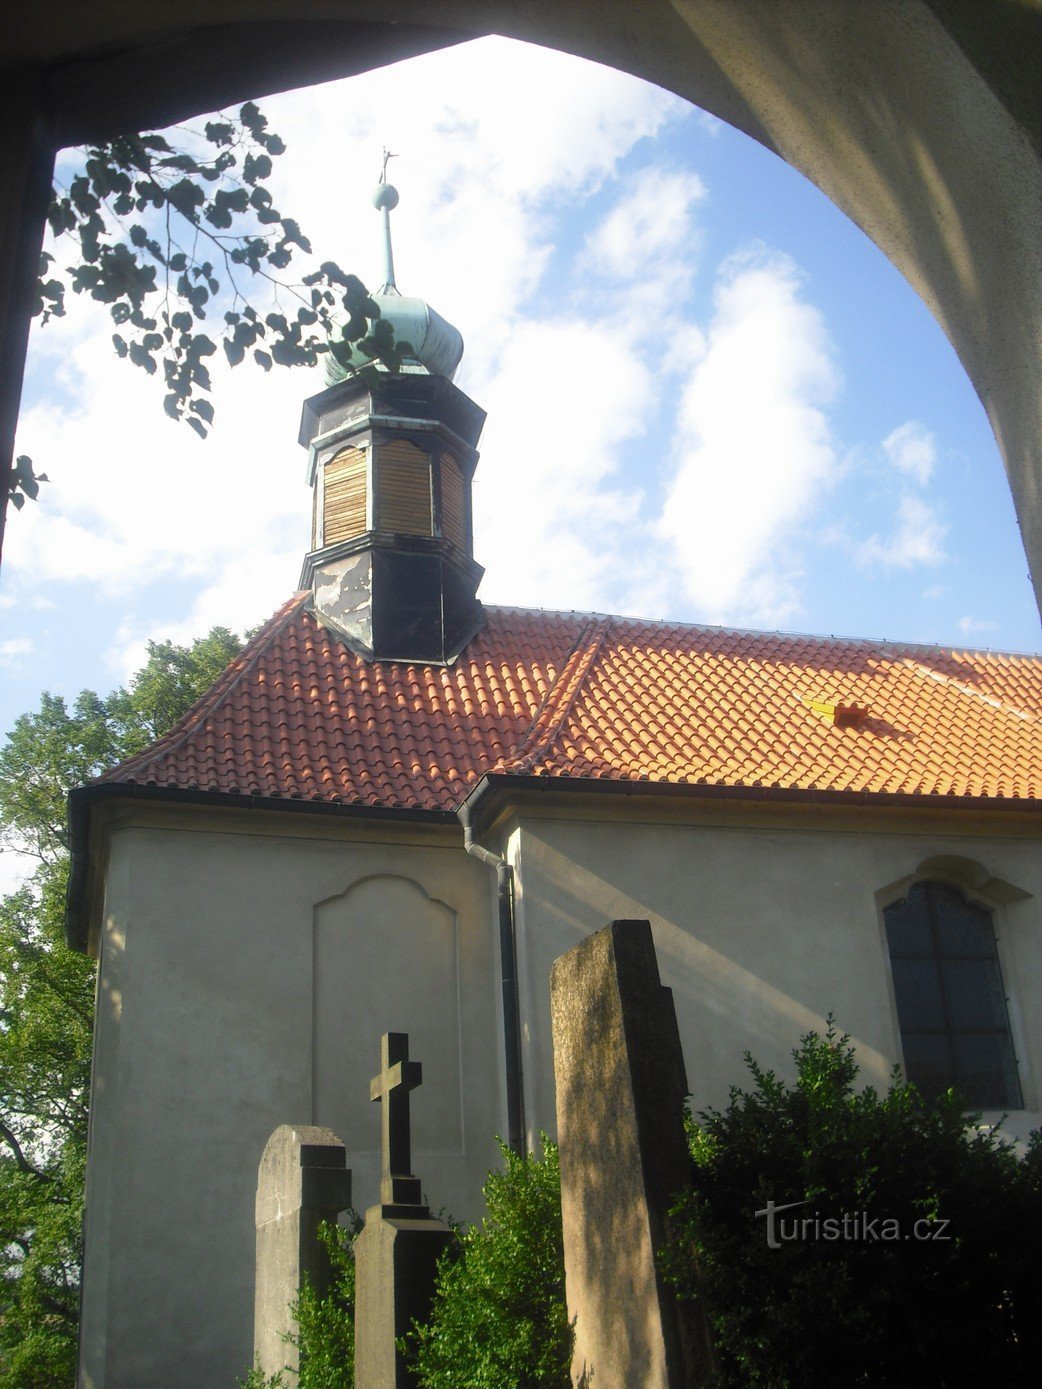 Kerk van St. Jan Nepomucký in Tetin